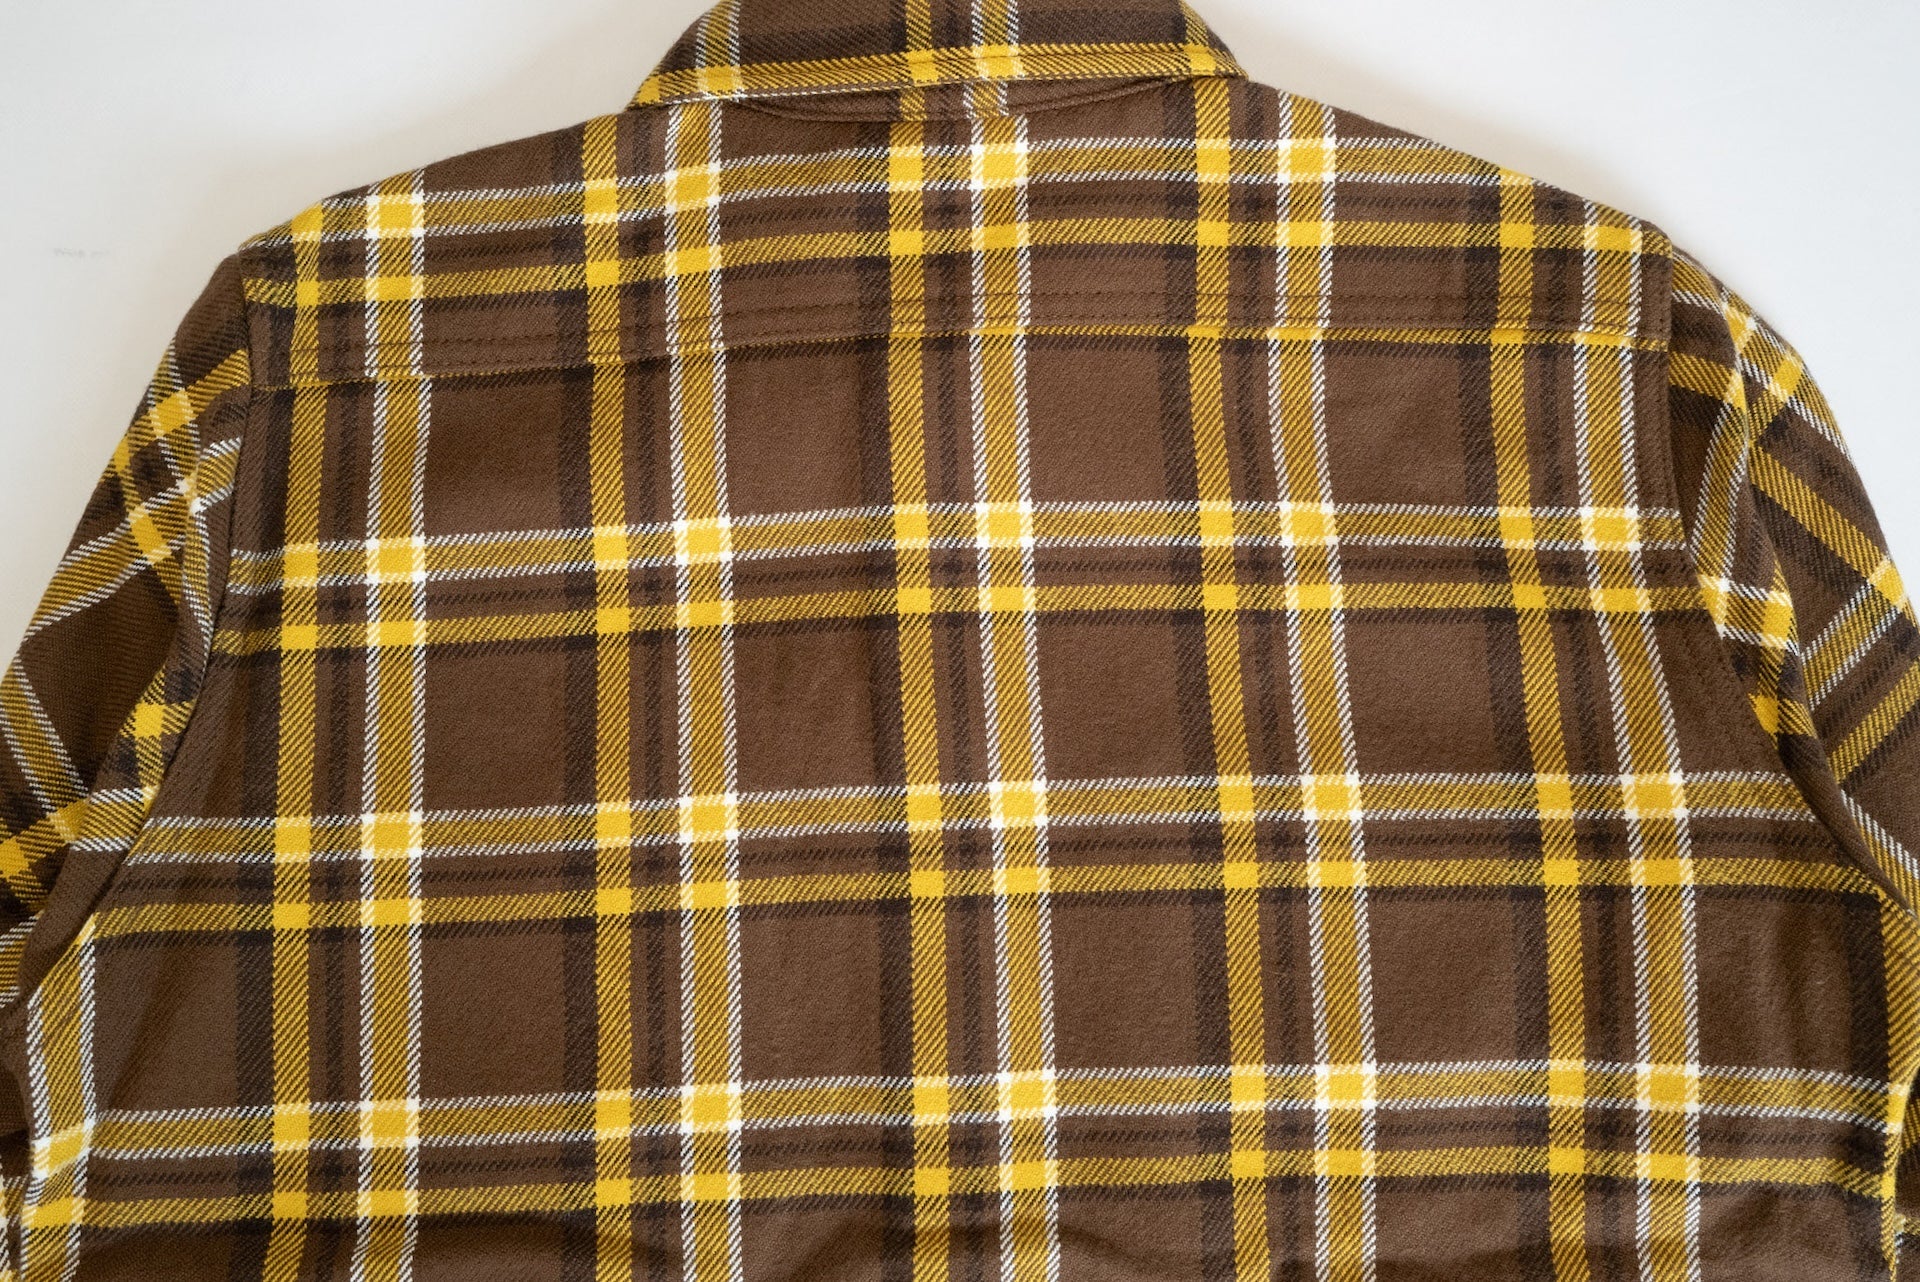 Iron Heart Ultra-Heavy Flannel Crazy Check Work Shirt (Mustard Brown)